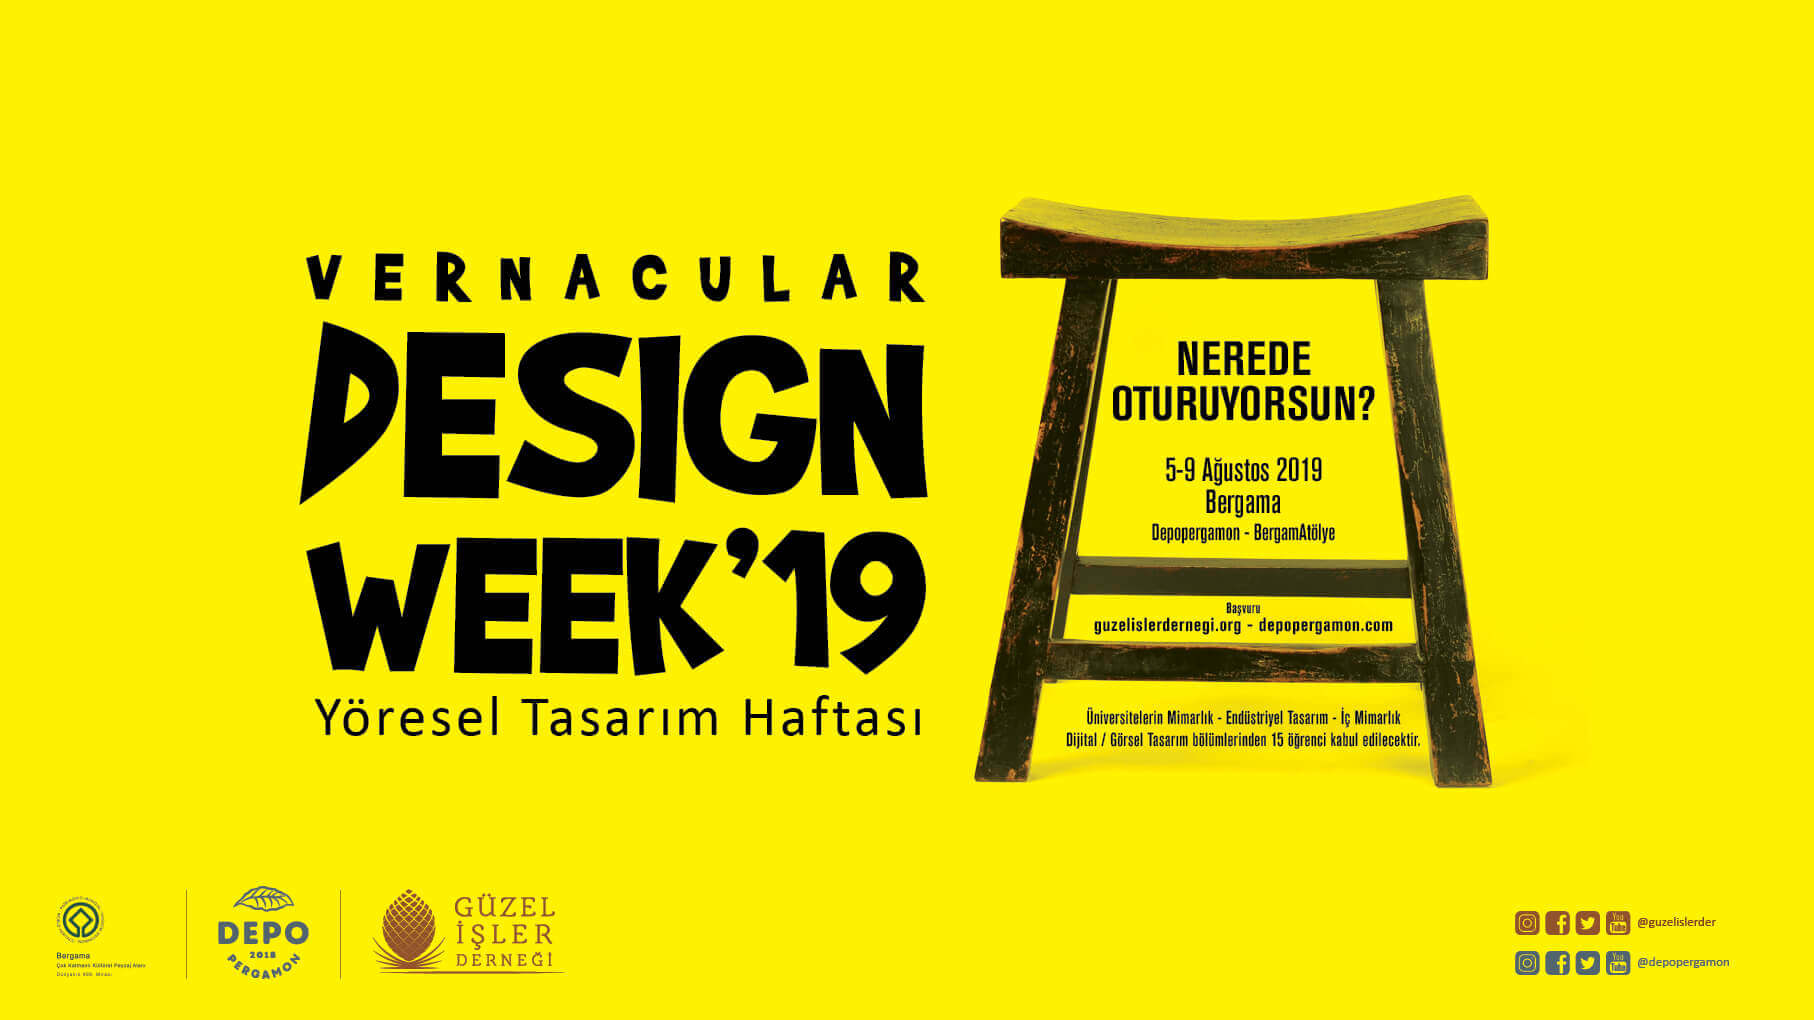 Vernacular Design Week ’19